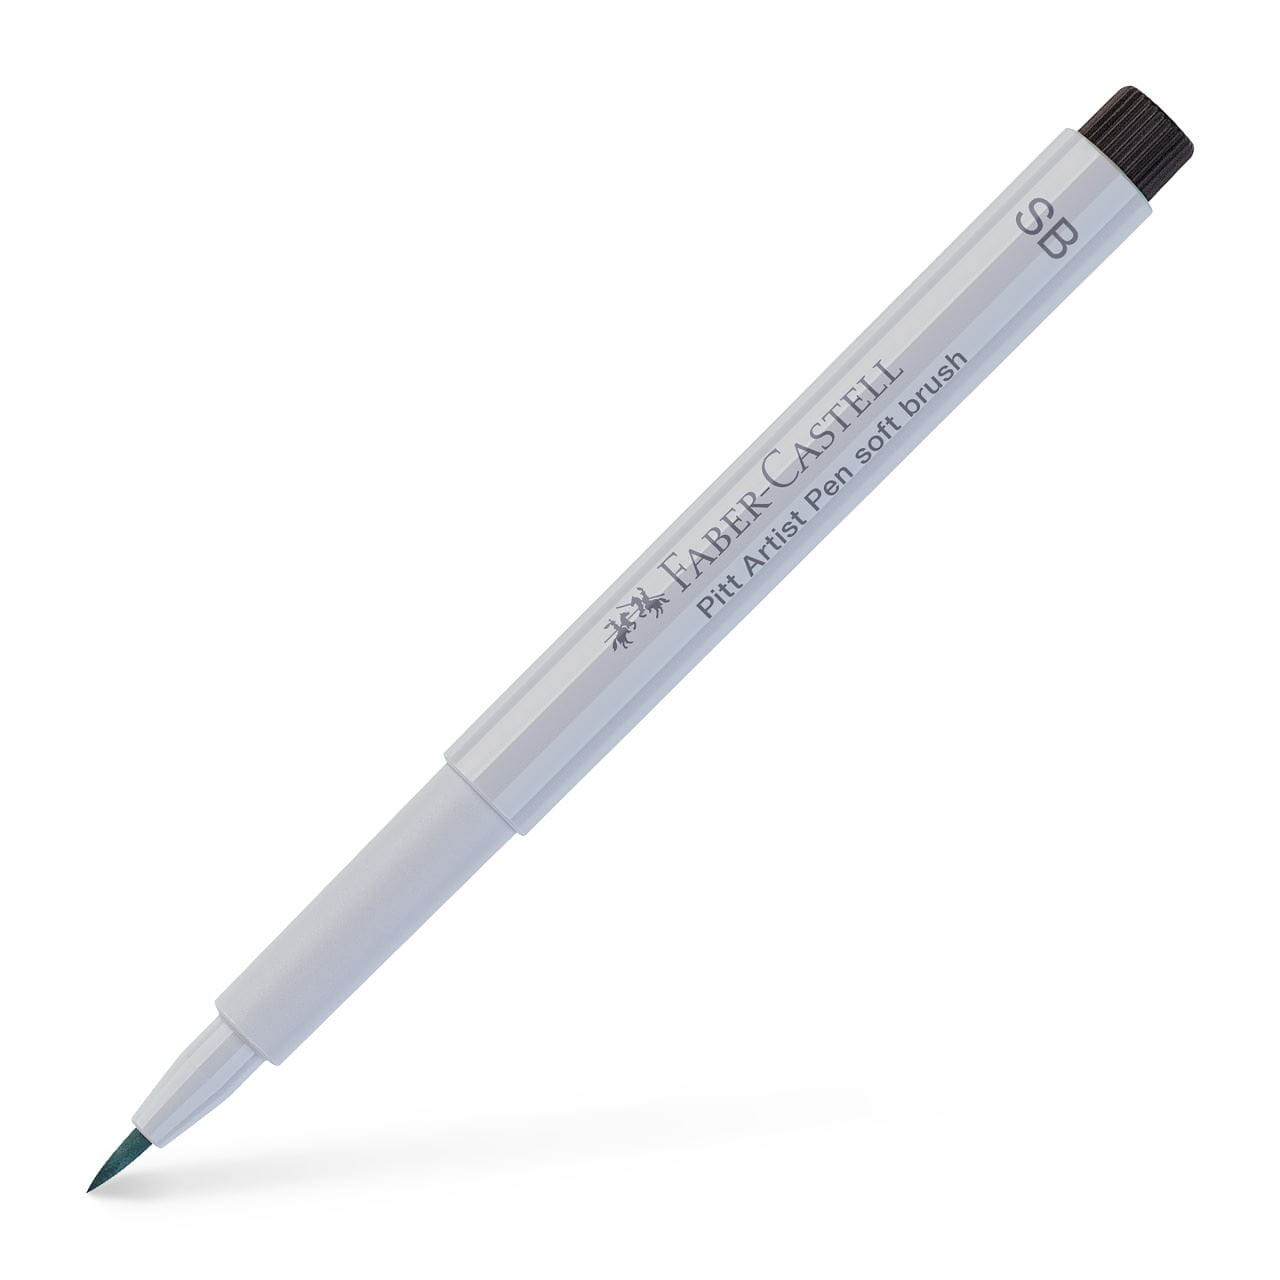 Faber-Castell - Pitt Artist Pen Soft Brush India ink pen, cold grey I